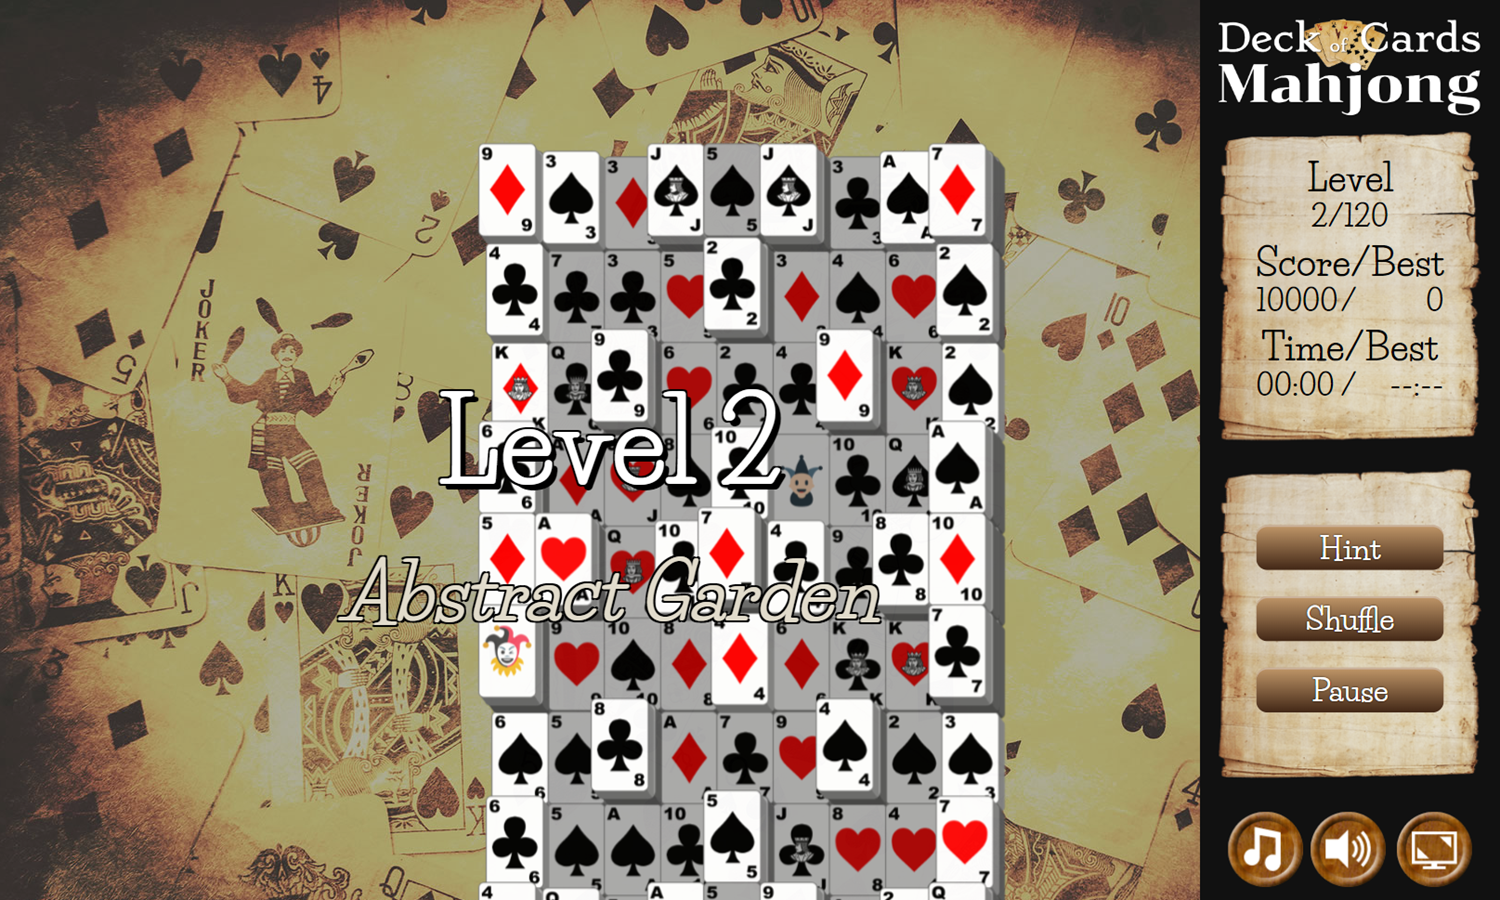 Deck of Cards Mahjong Game Next Level Screenshot.